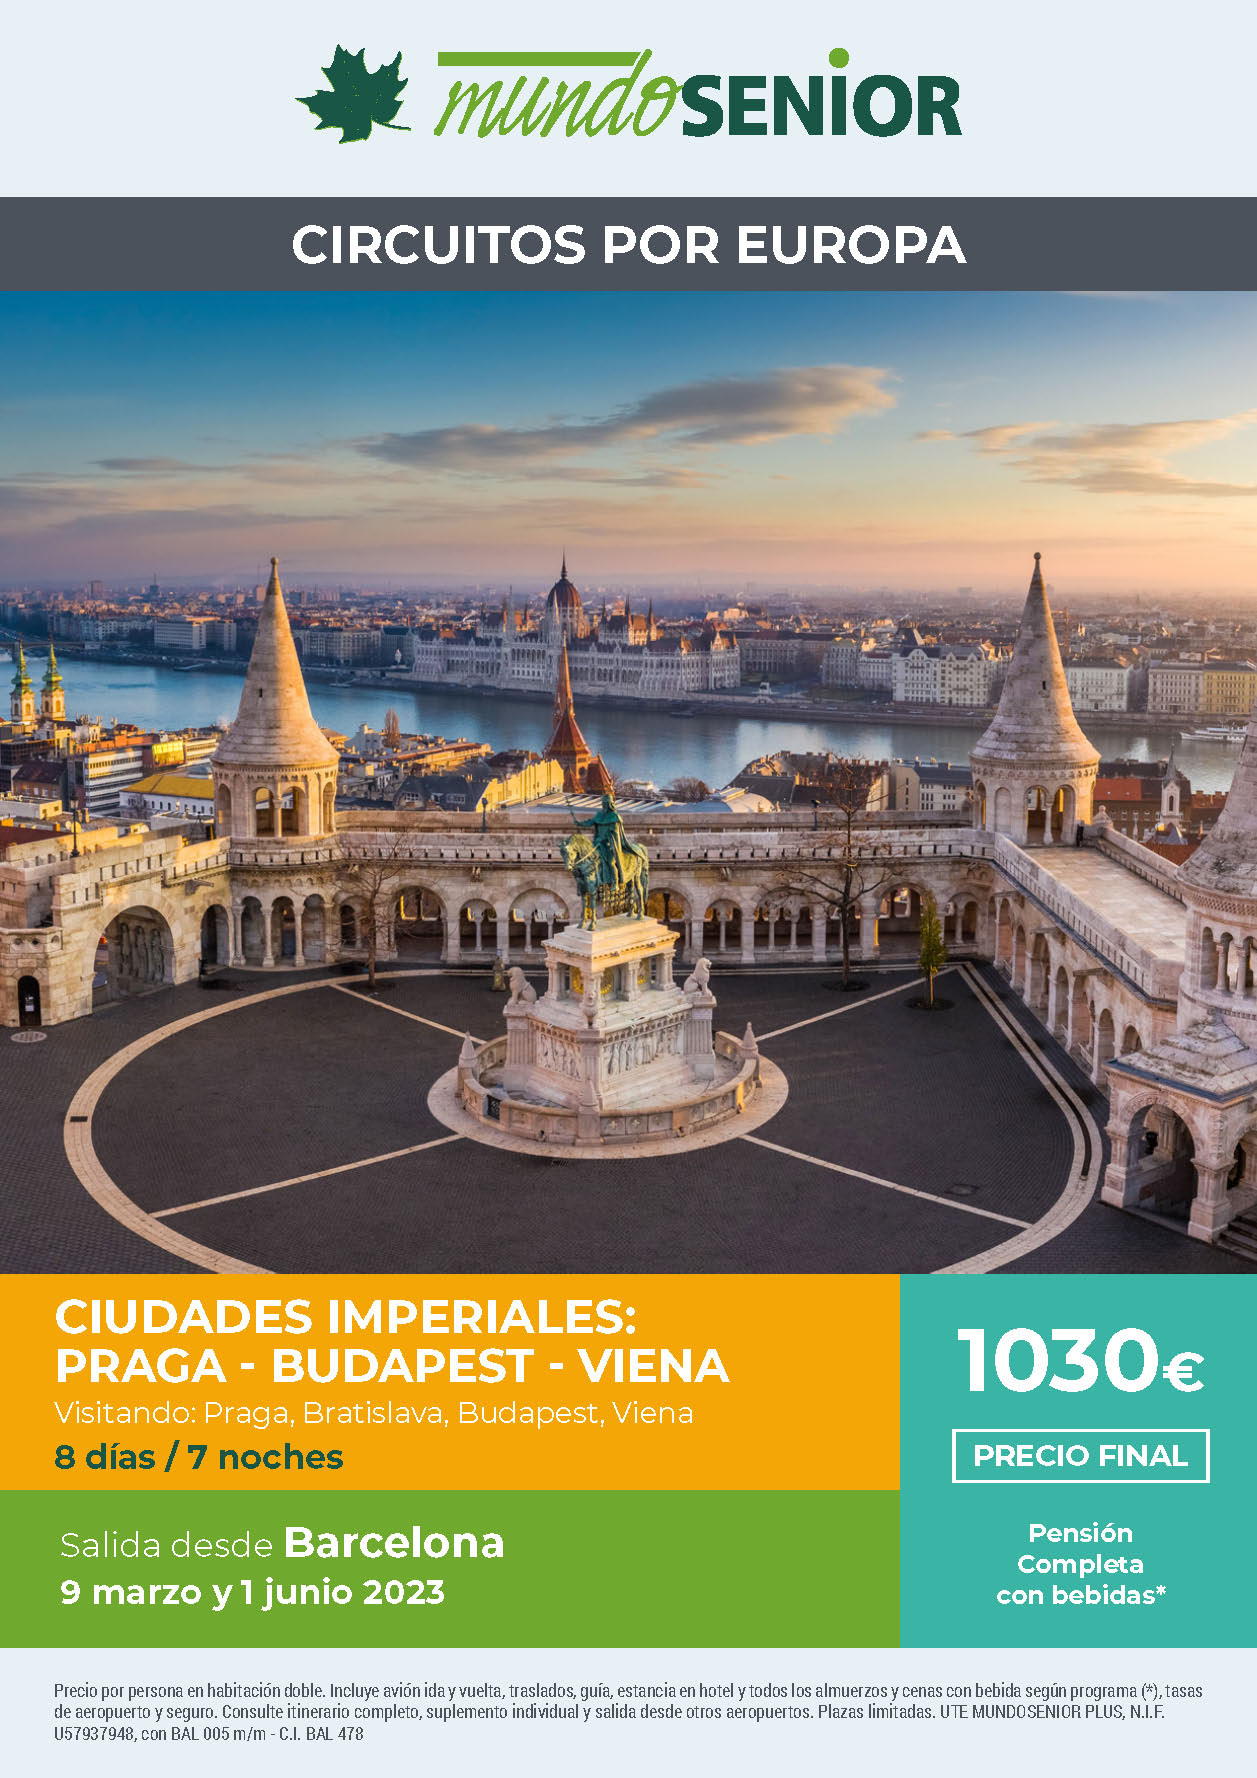 Oferta Mundo Senior circuito Praga Budapest Viena Pension Completa 8 dias salidas marzo y junio 2024 desde Barcelona